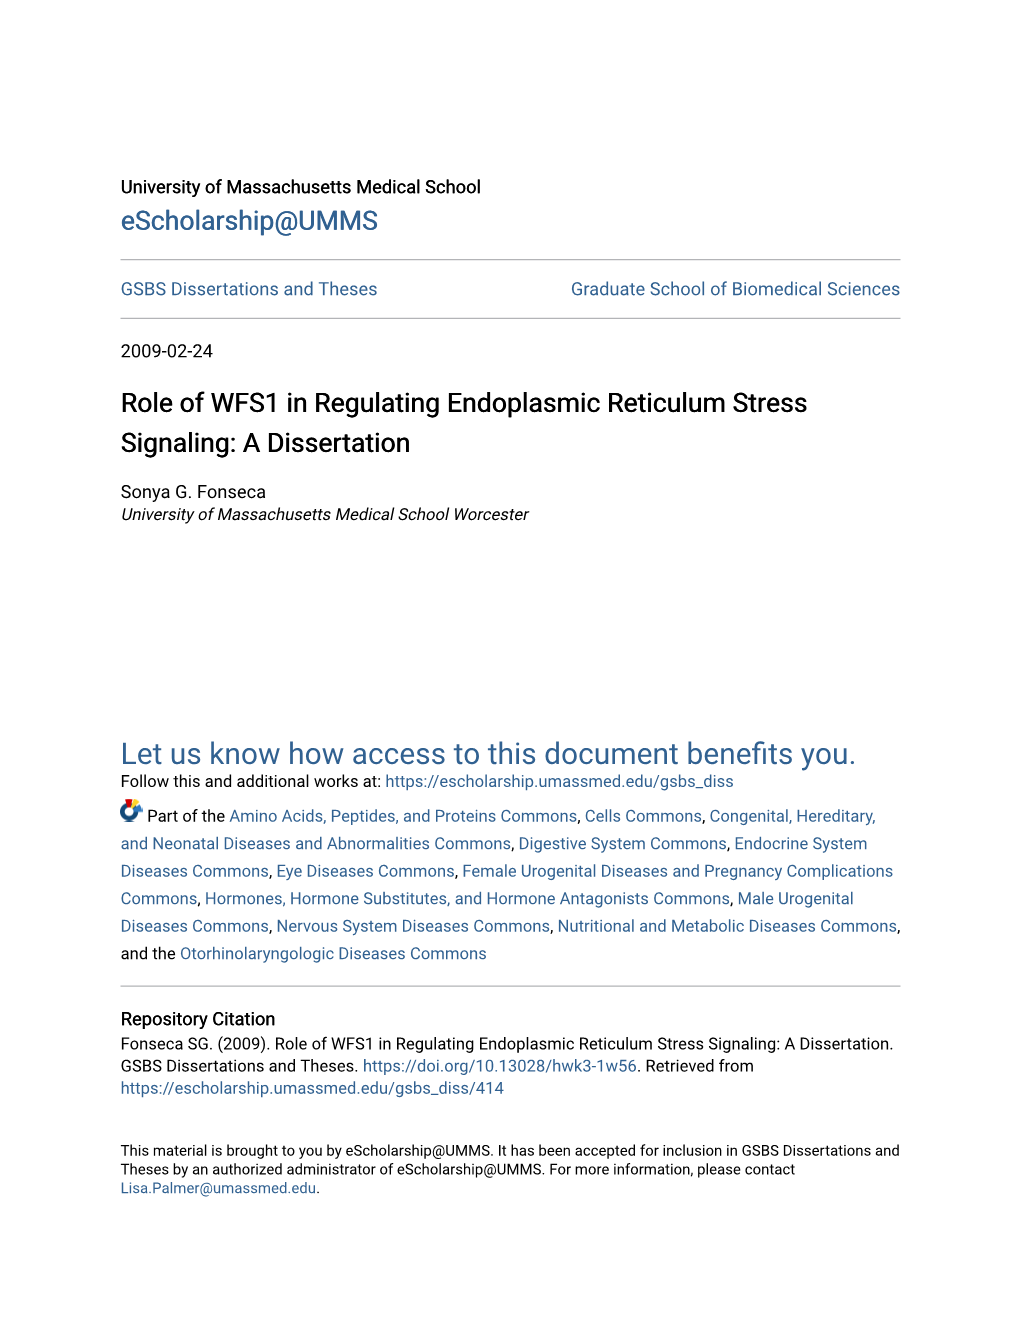 Role of WFS1 in Regulating Endoplasmic Reticulum Stress Signaling: a Dissertation